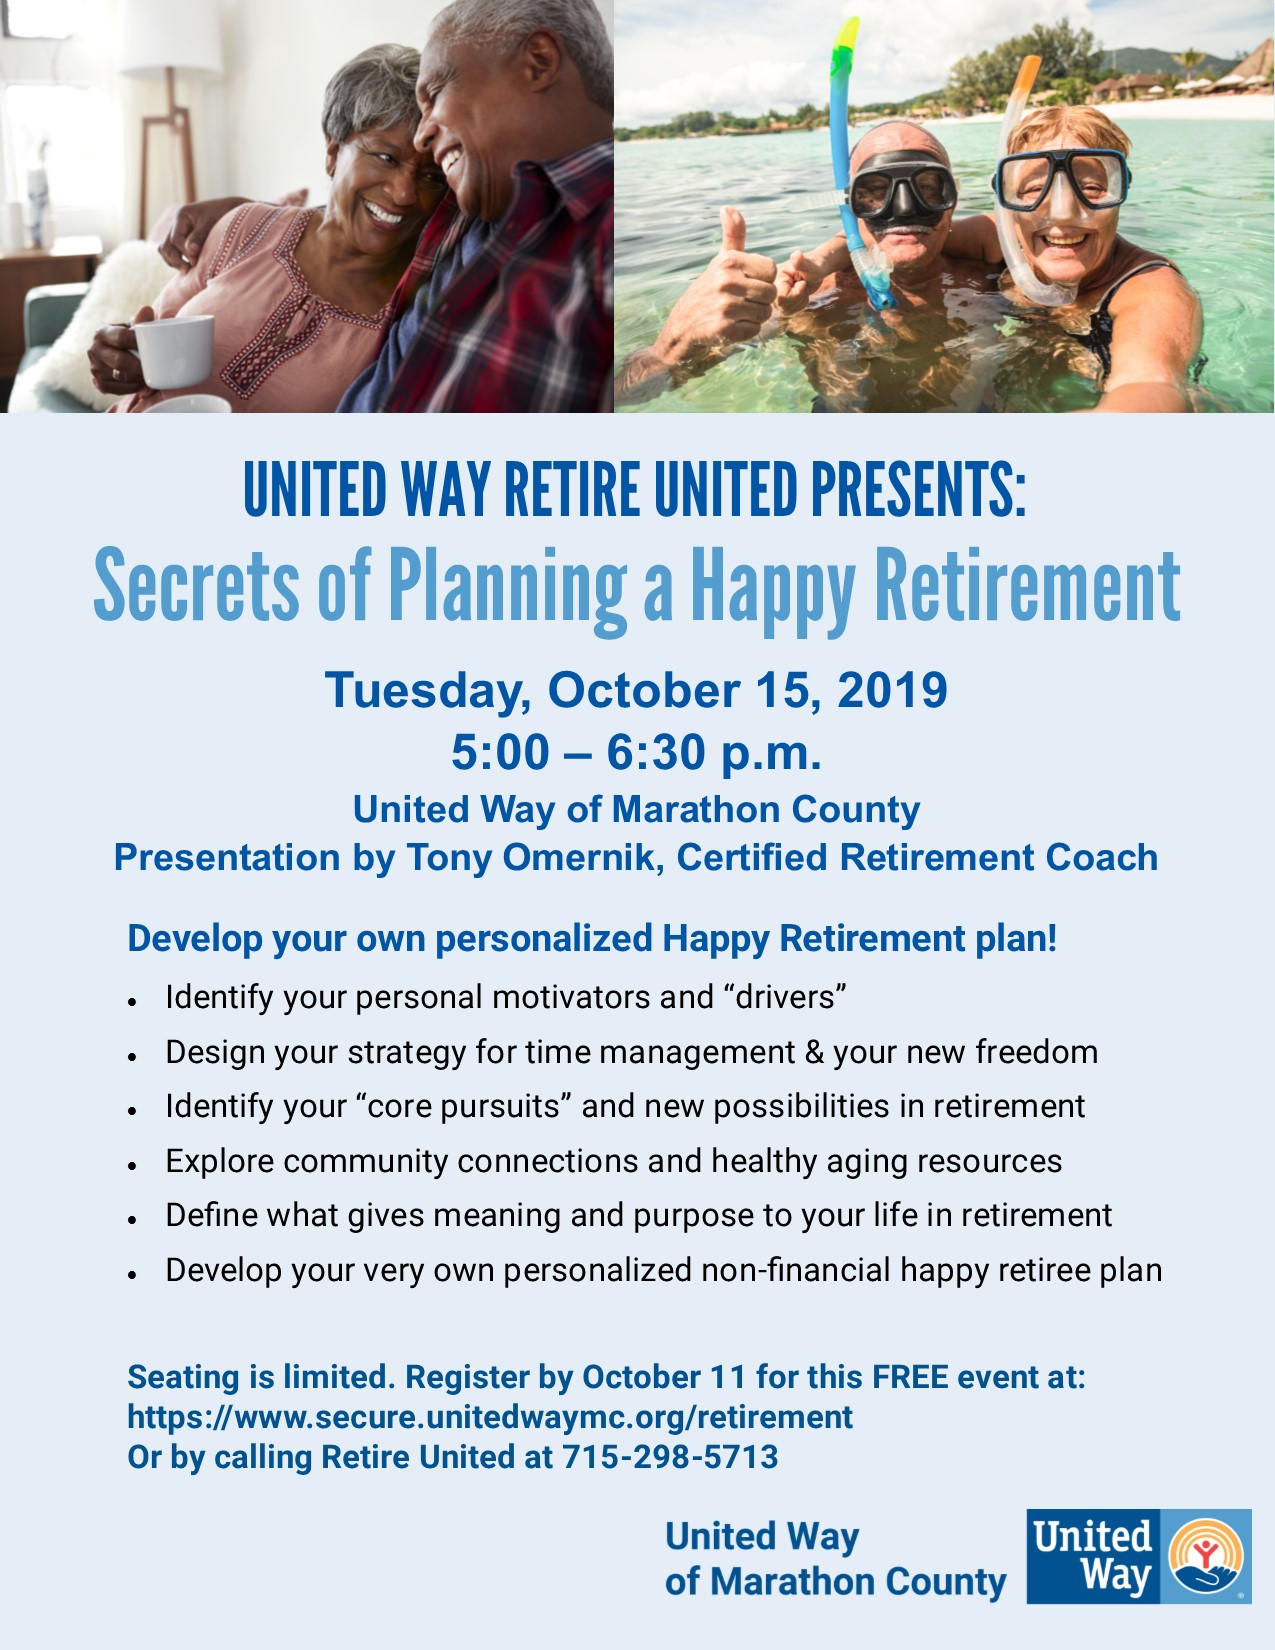 Secrets of Planning a Happy Retirement.jpg